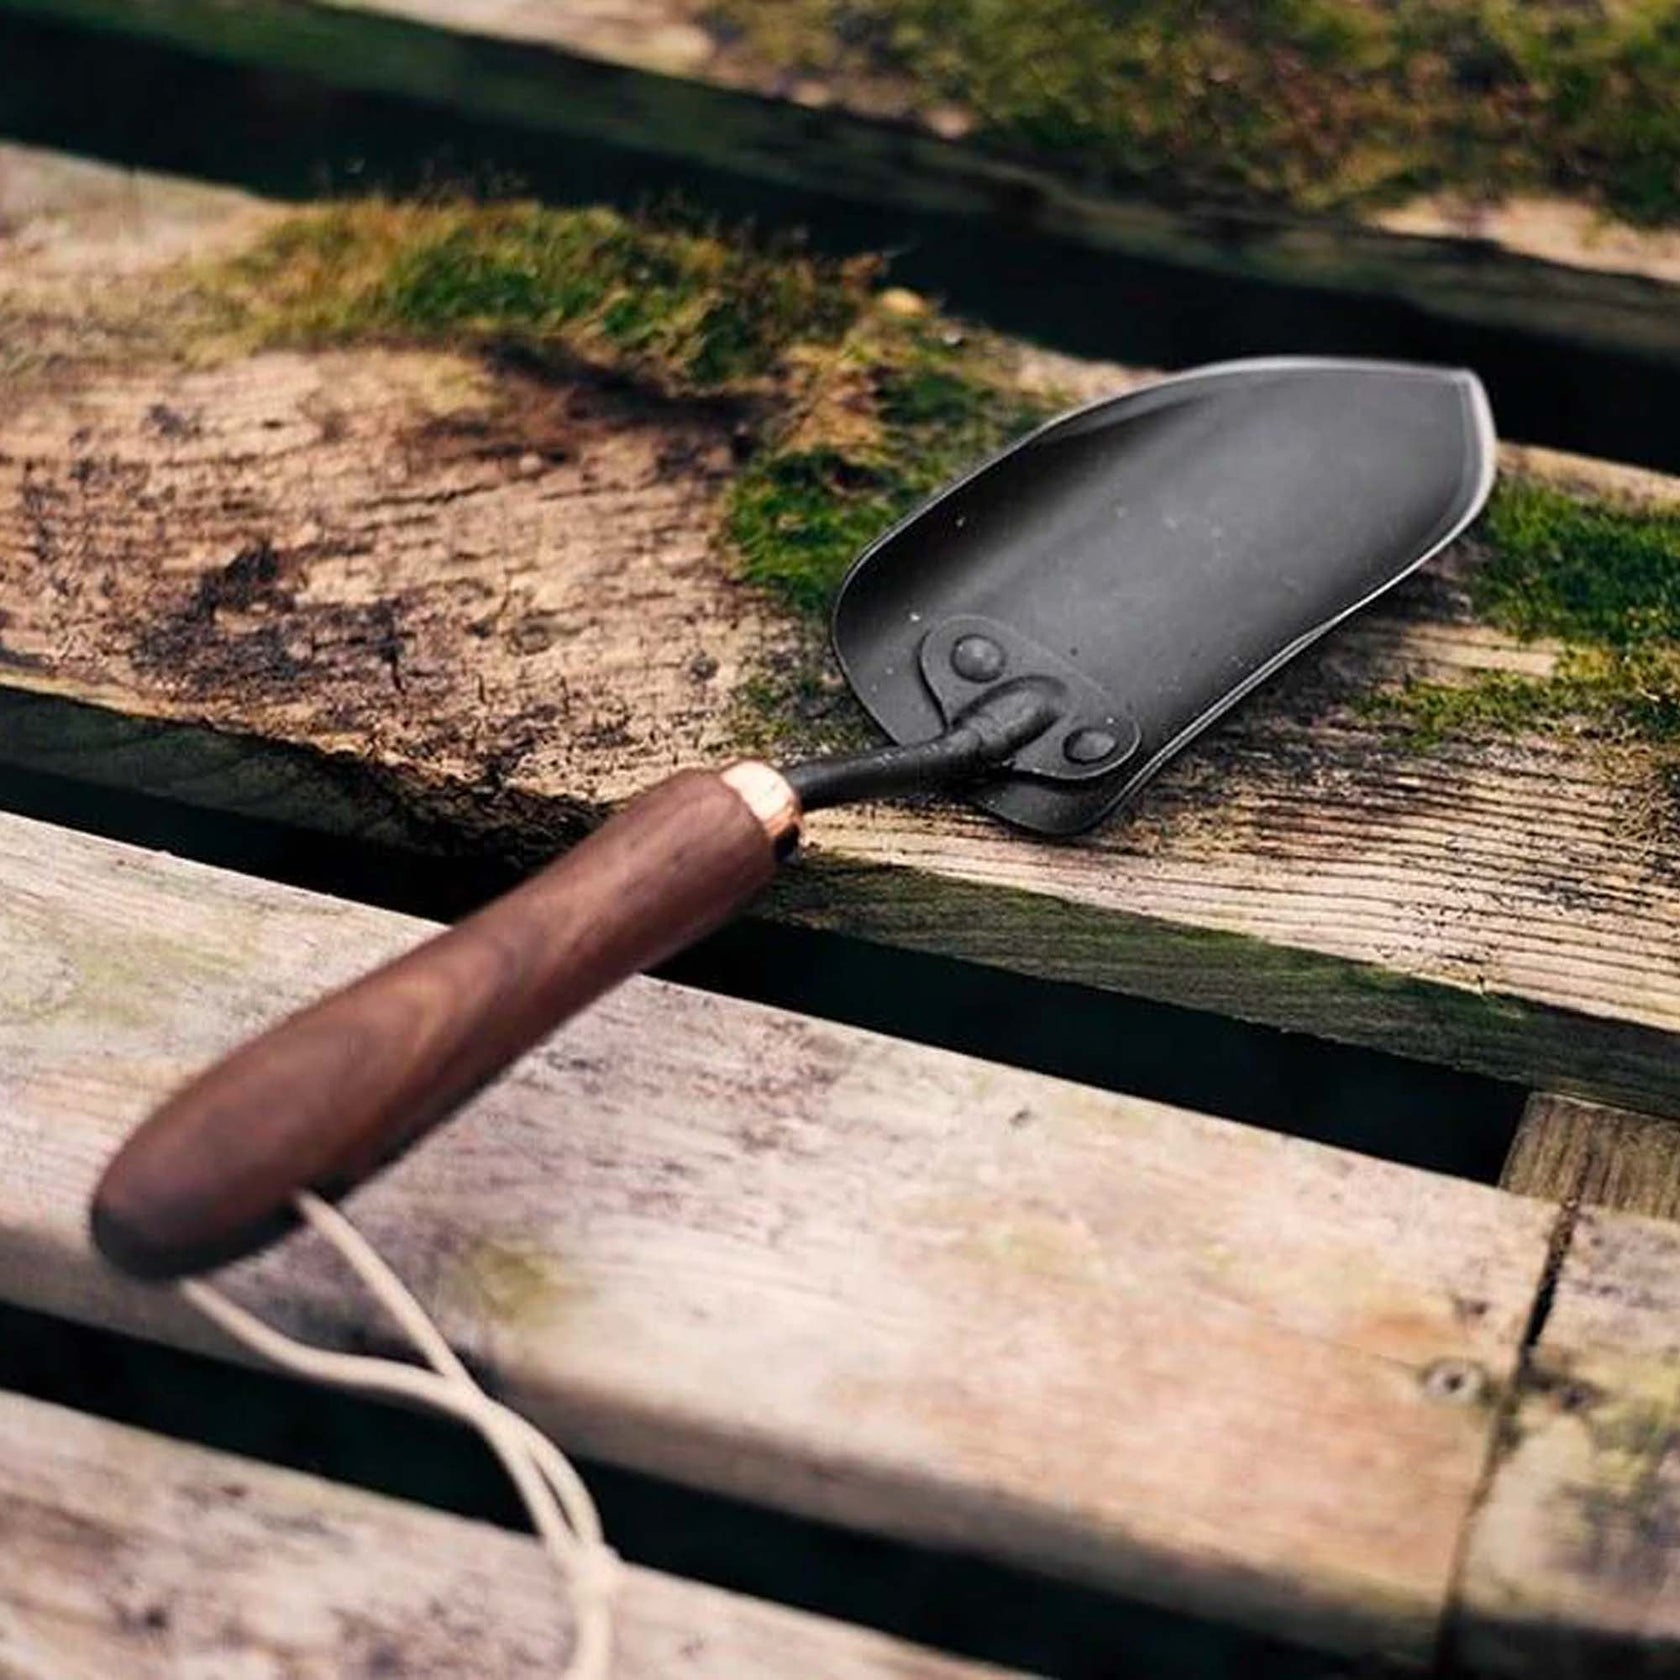 Ergonomic, heat-treated stainless steel blade and comfortable walnut handle.